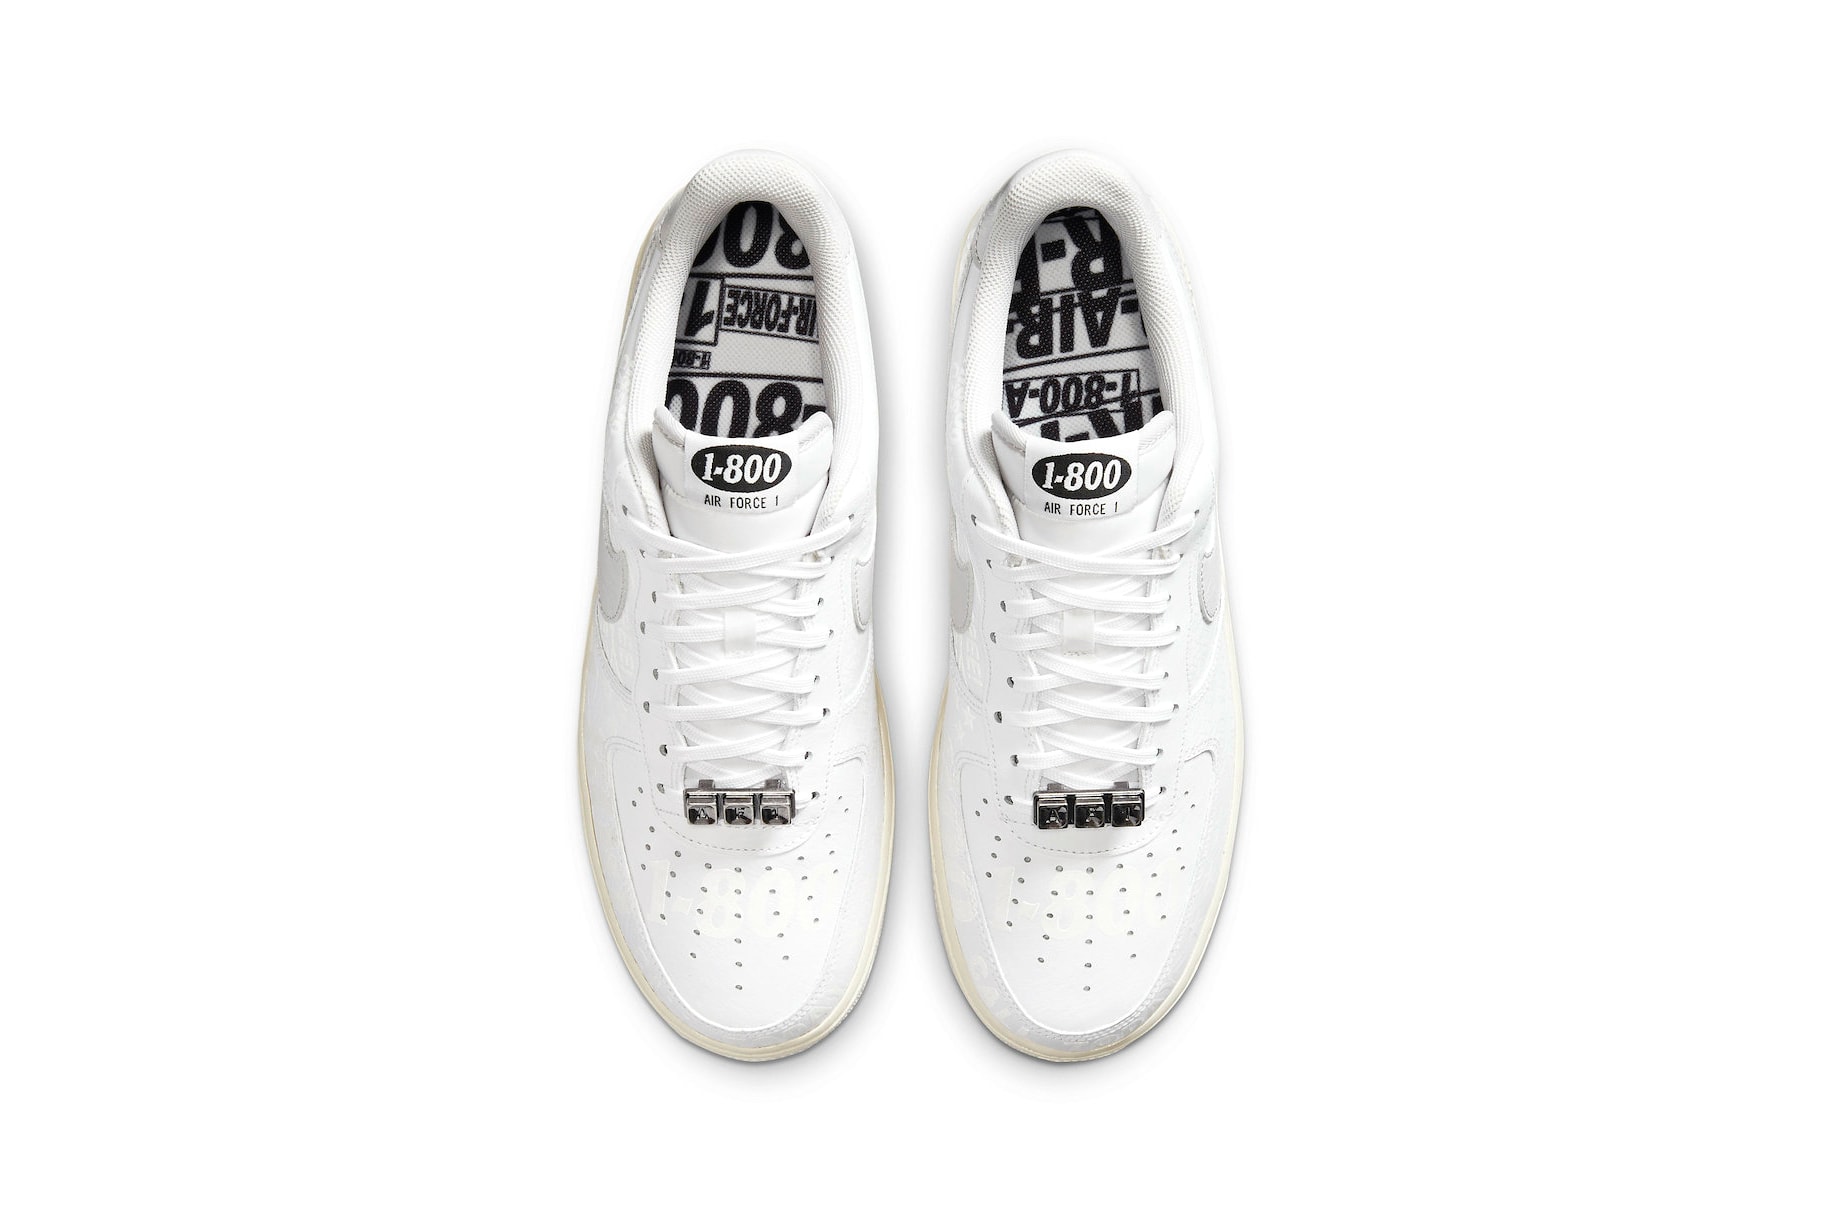 Nike Air Force 1 Low Hi "Toll Free" CJ1631-100 CU1414-001 "White/Vast Grey-Sail-Black" "Black/Black-Sail-Vast Grey" ’07 Premium Sneaker Release Information Closer Look Drop Date "1-800"